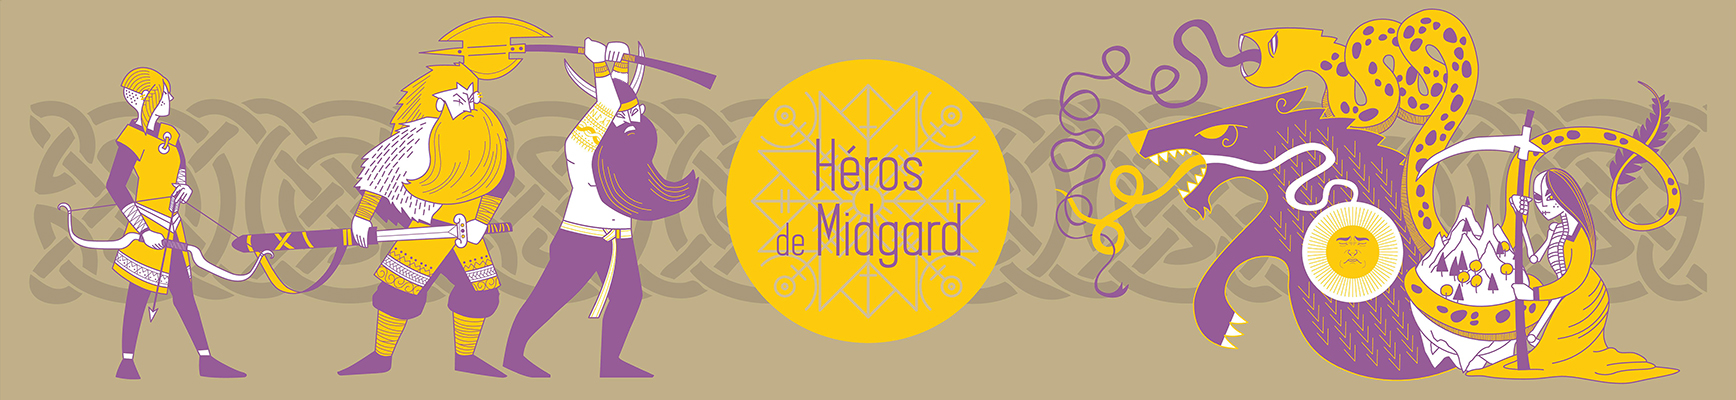 Héros de Midgard